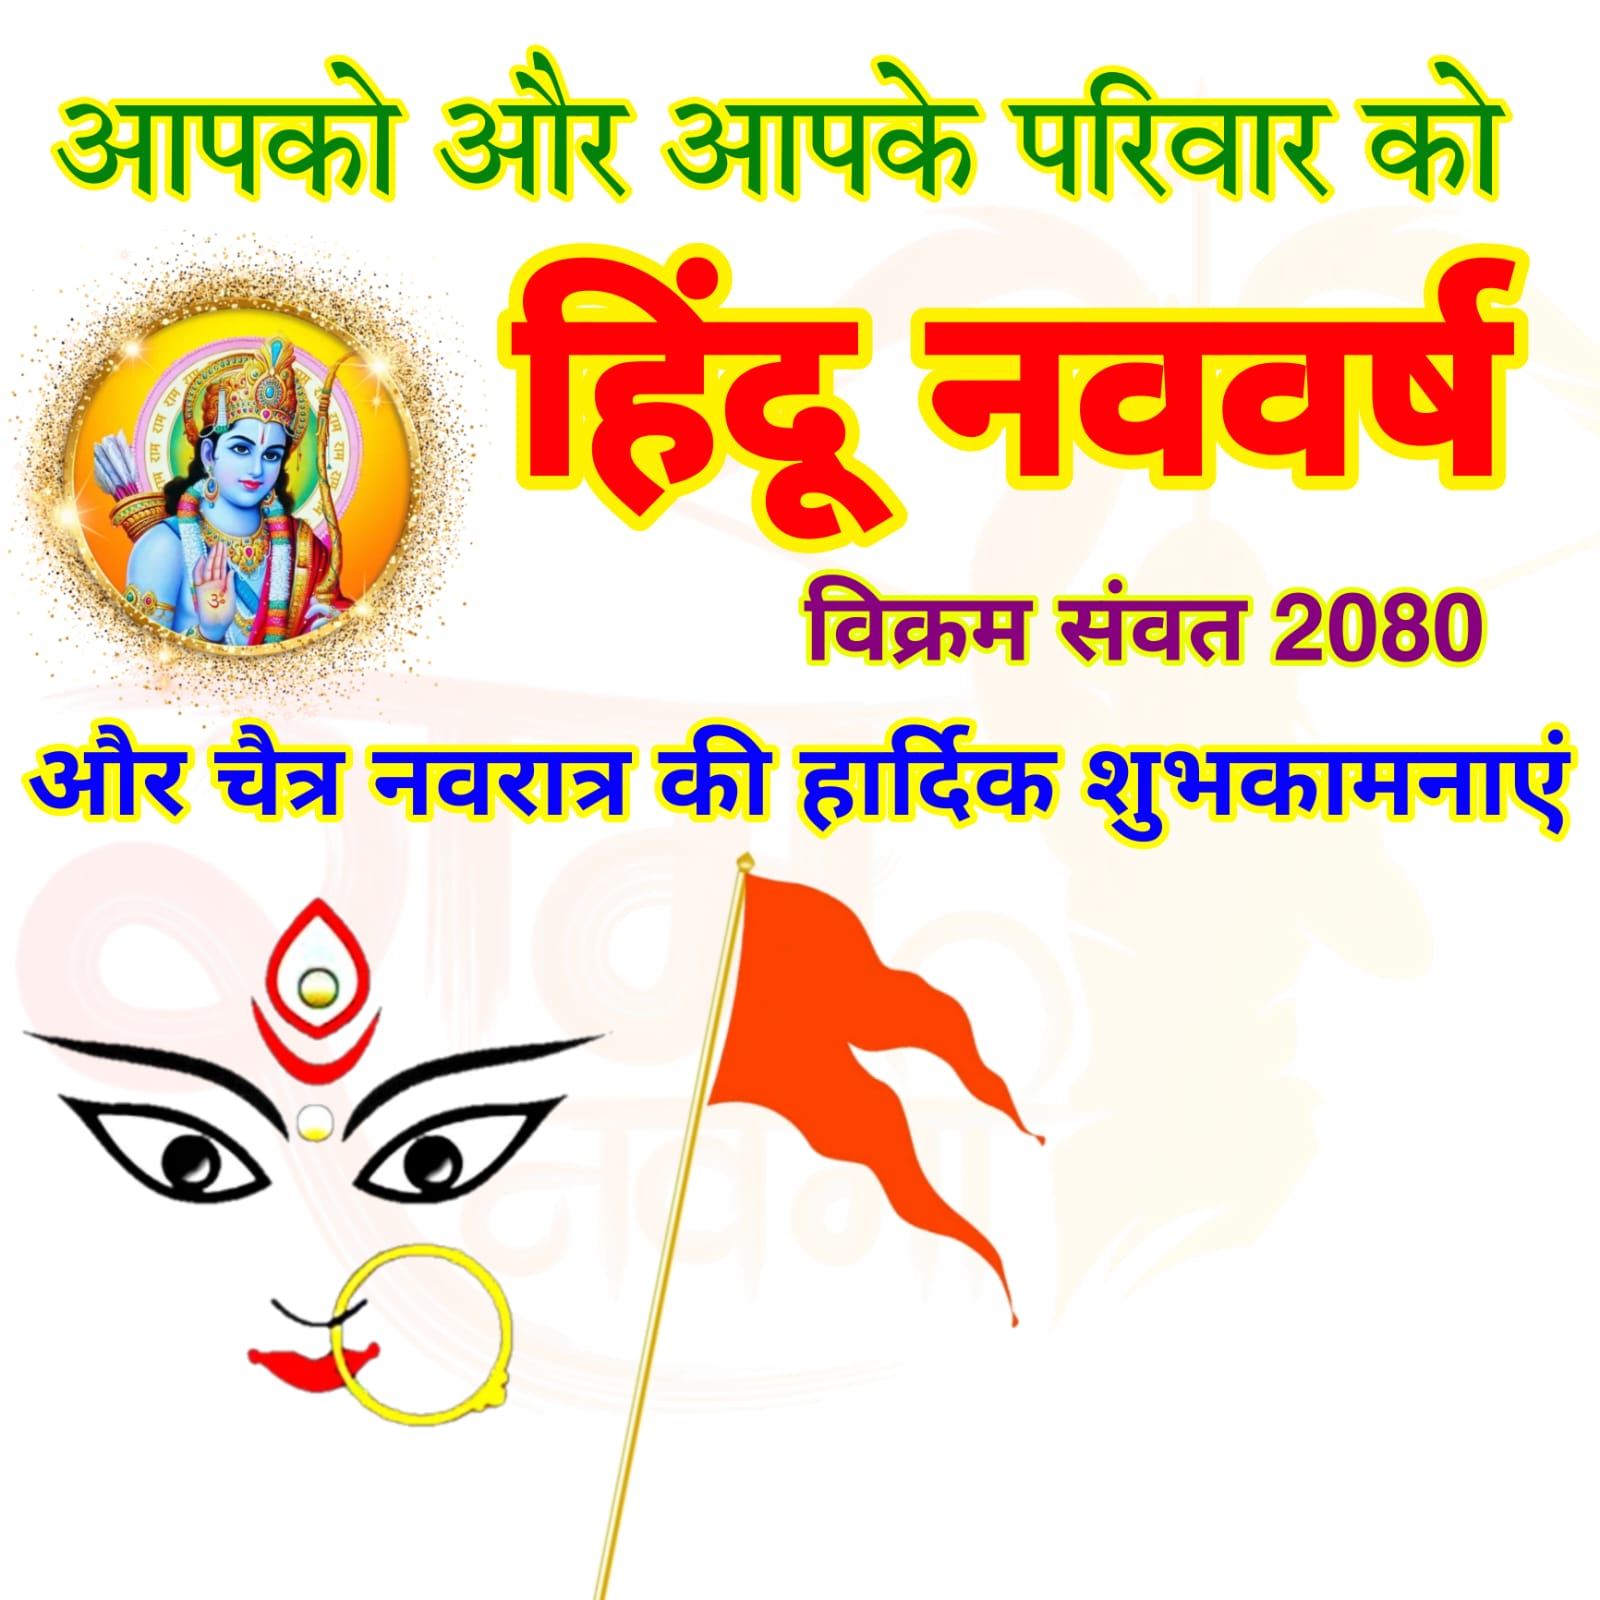 Hindu Nav Varsh ki Hardik Shubhkamnaye poster Banner images